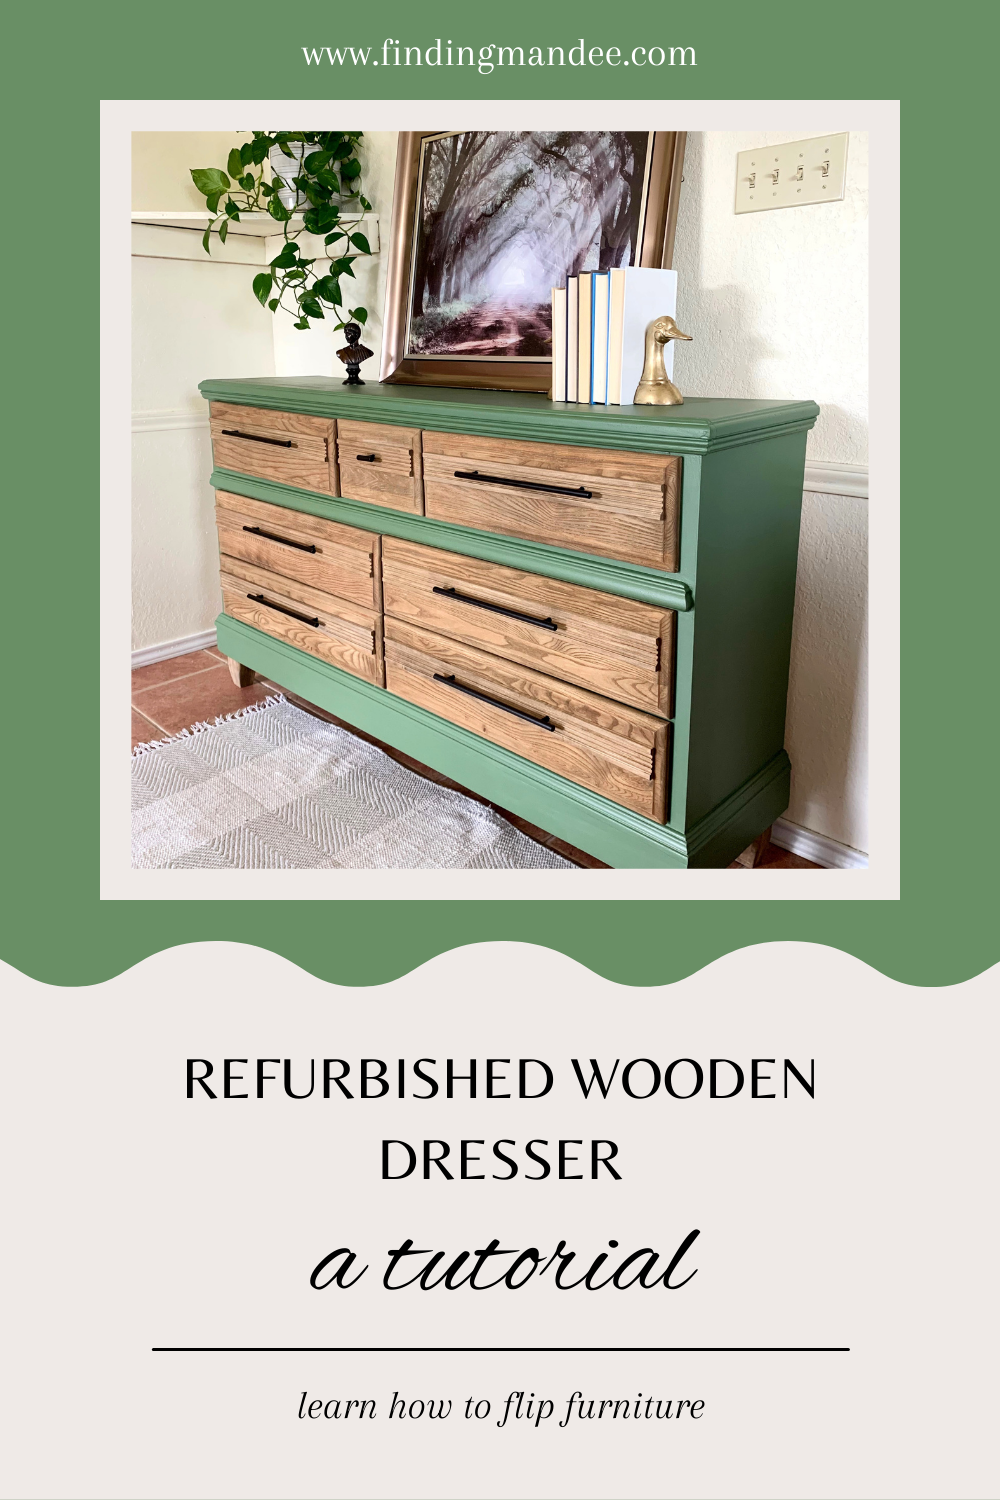 Refurbished Wooden Dresser: A Tutorial | Finding Mandee